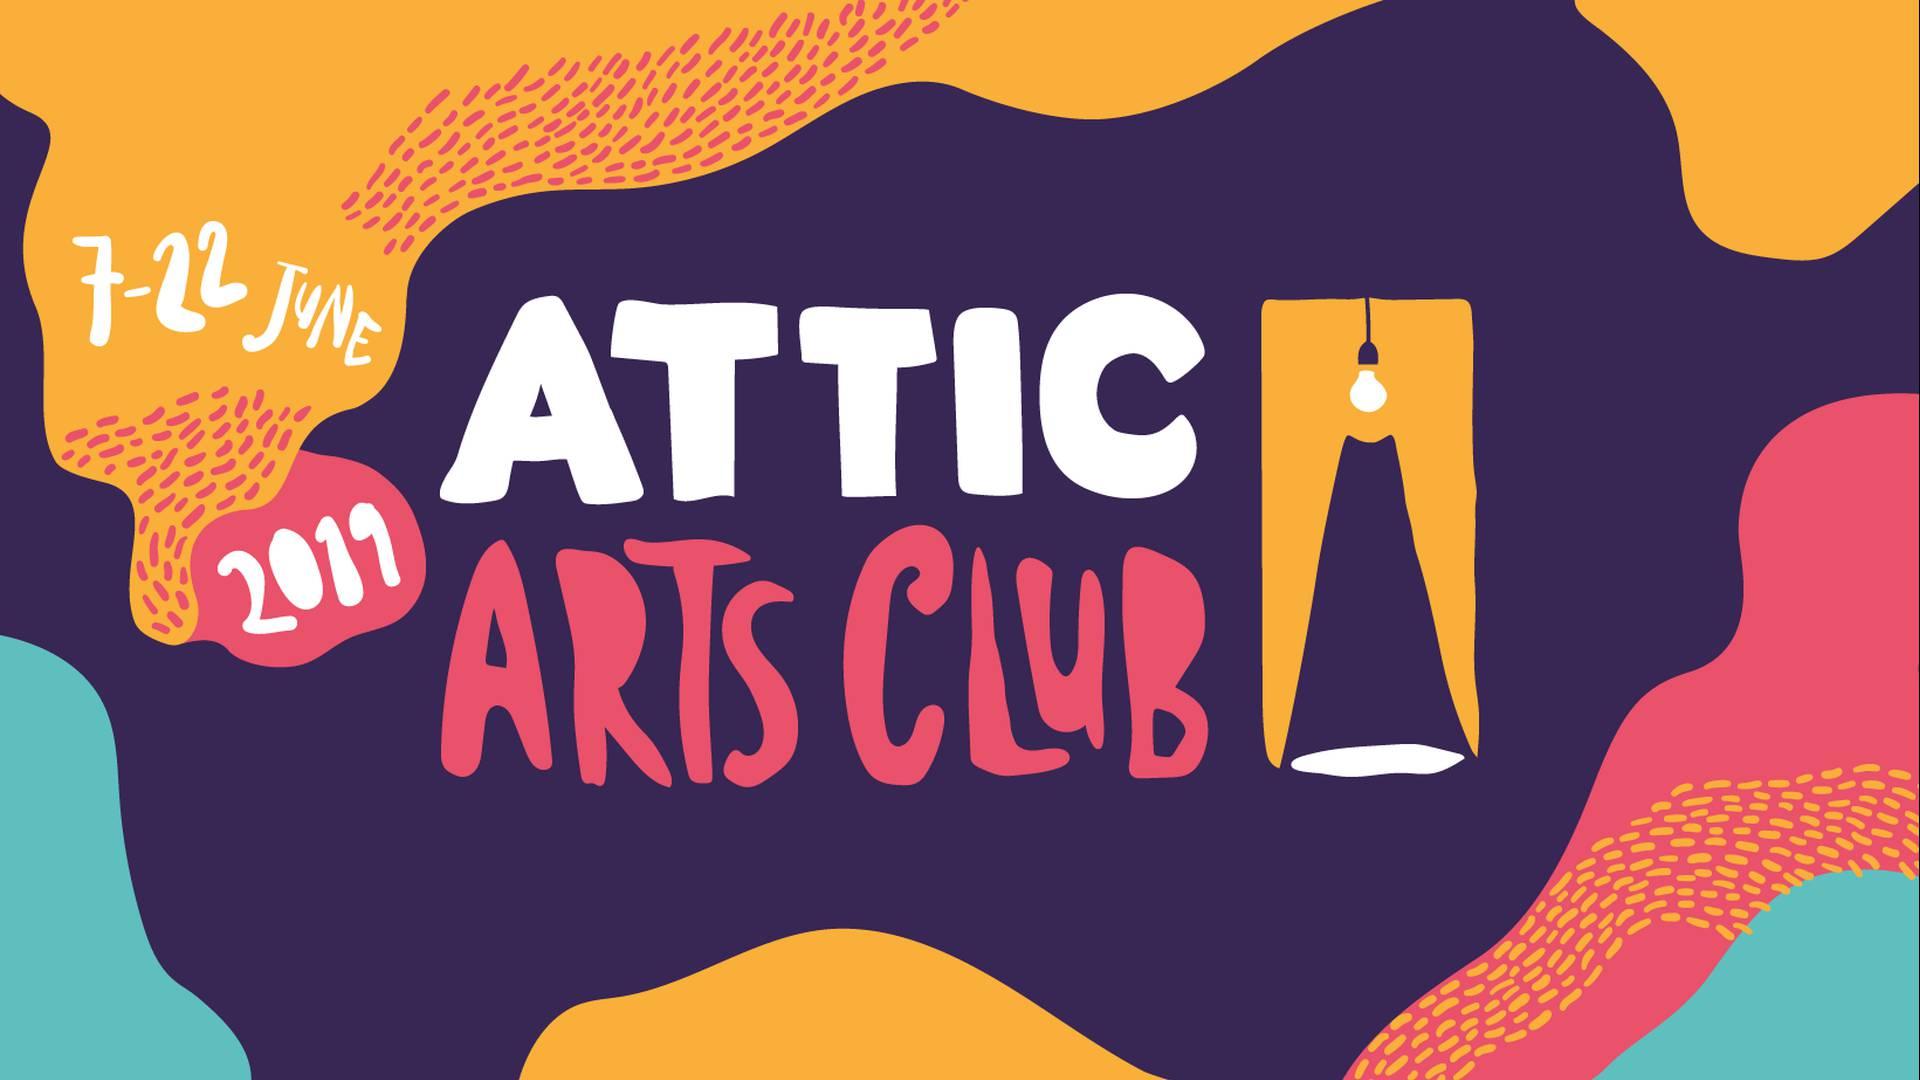 Attic Arts Club photo